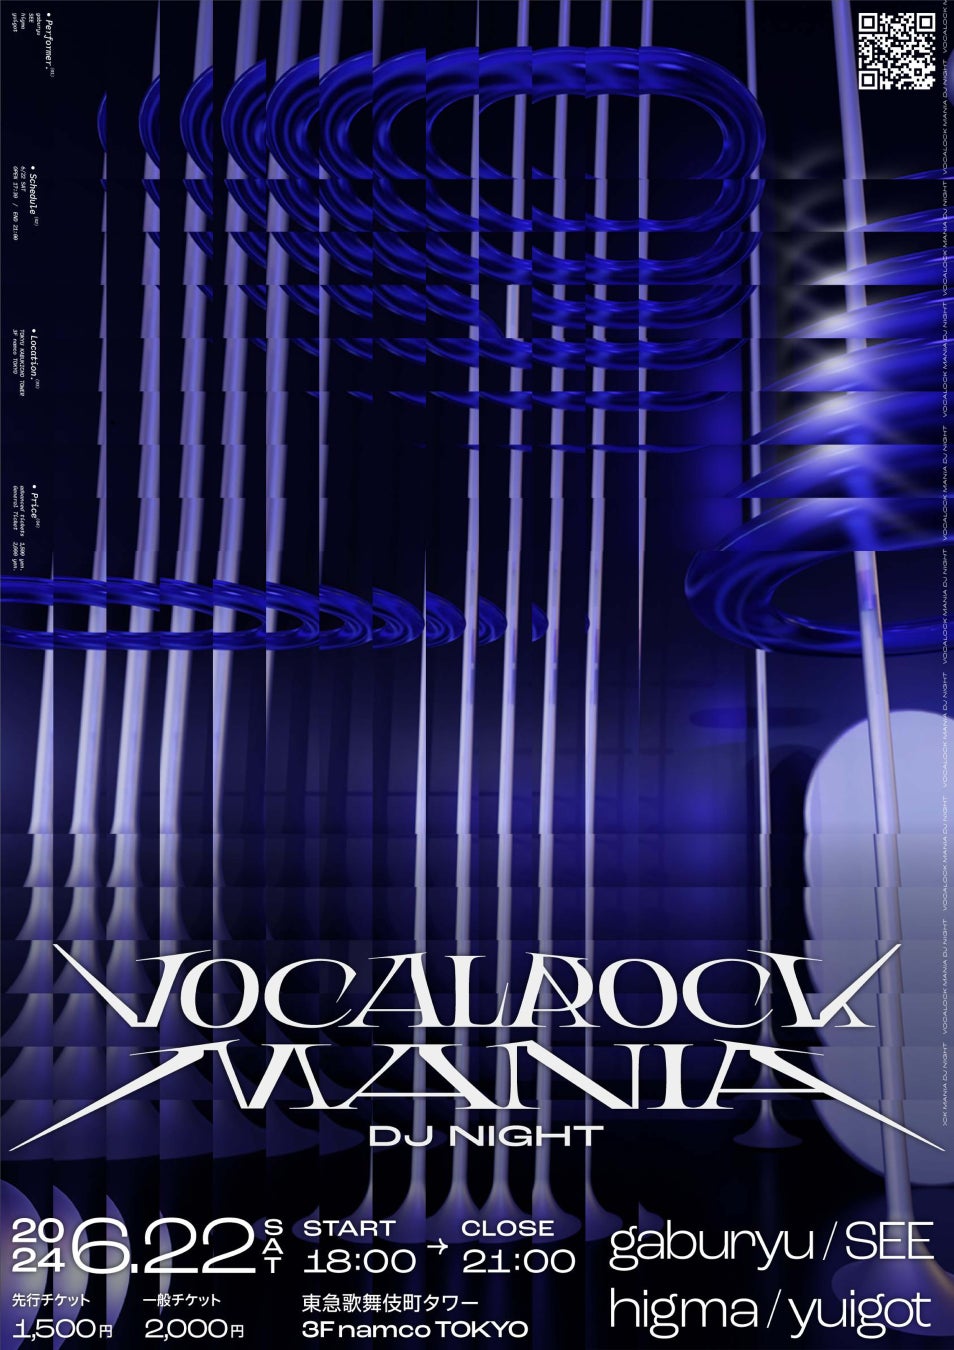 VOCALOCK MANIA ver.3の前夜祭「VOCALOCK MANIA DJ NIGHT」開催決定！出演者発表！